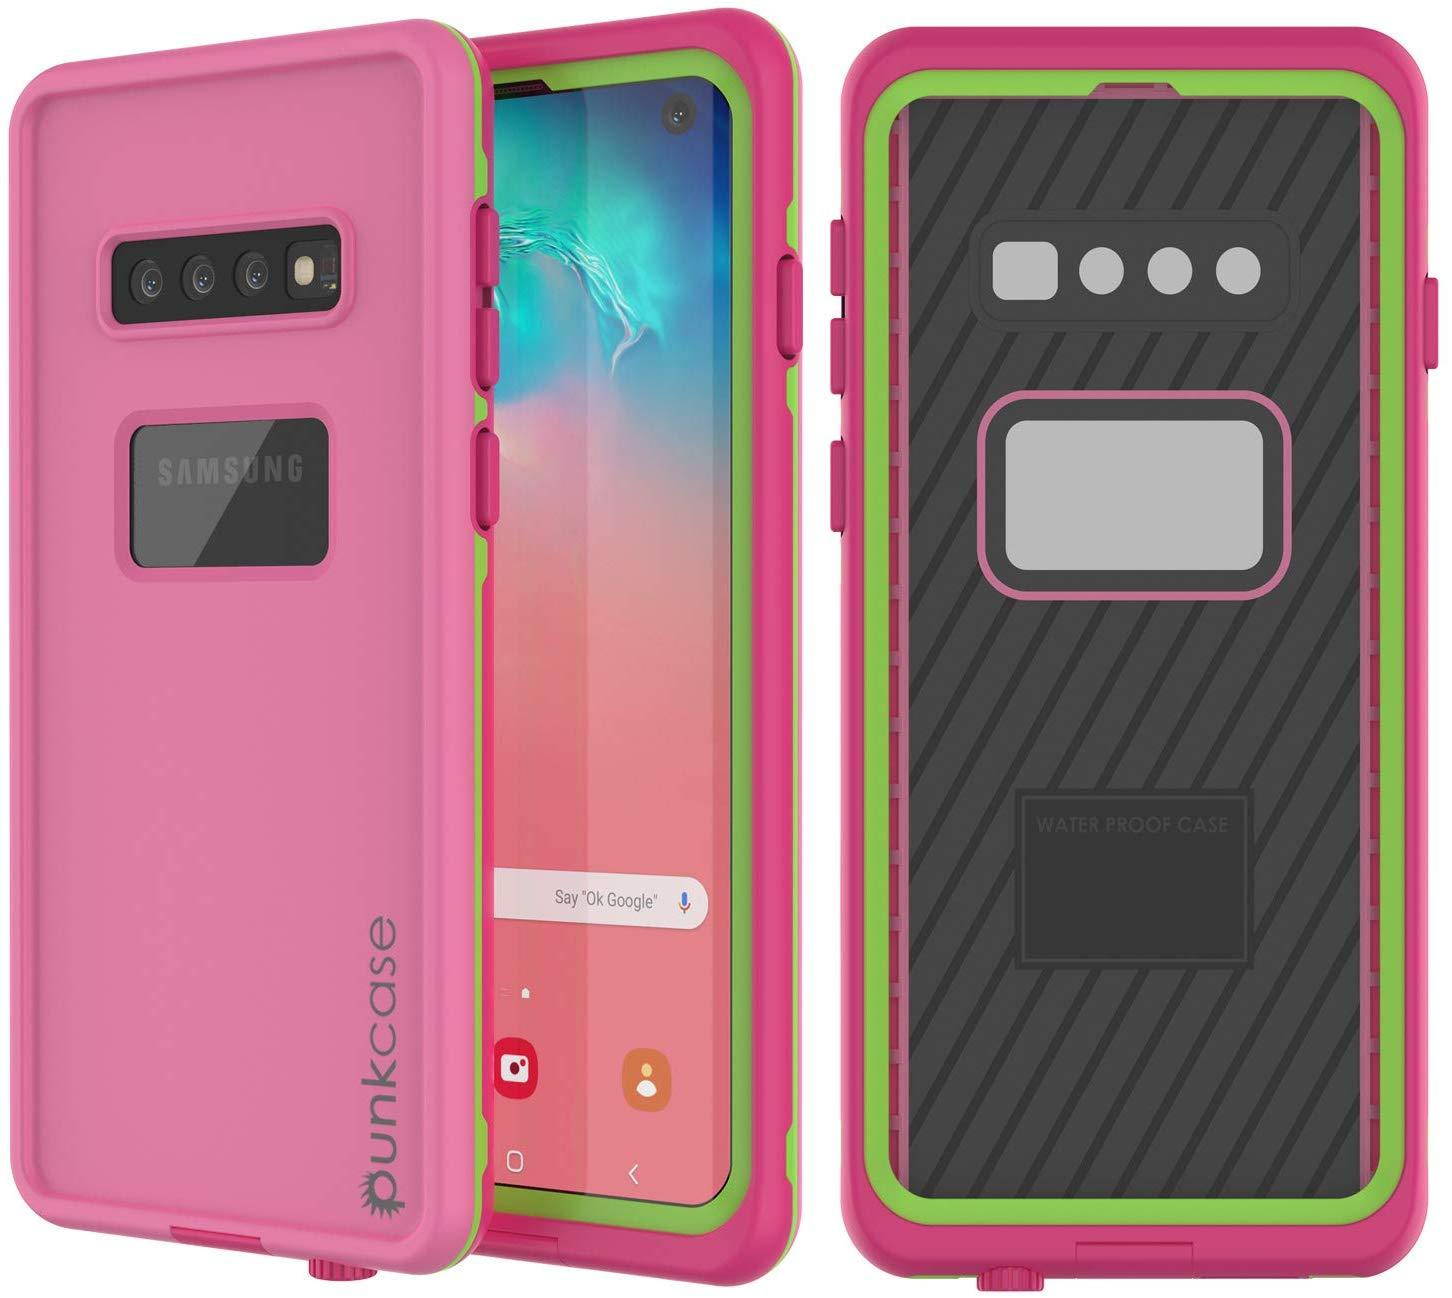 Punkcase S10 Waterproof Case [Aqua Series] Armor Cover [Pink]